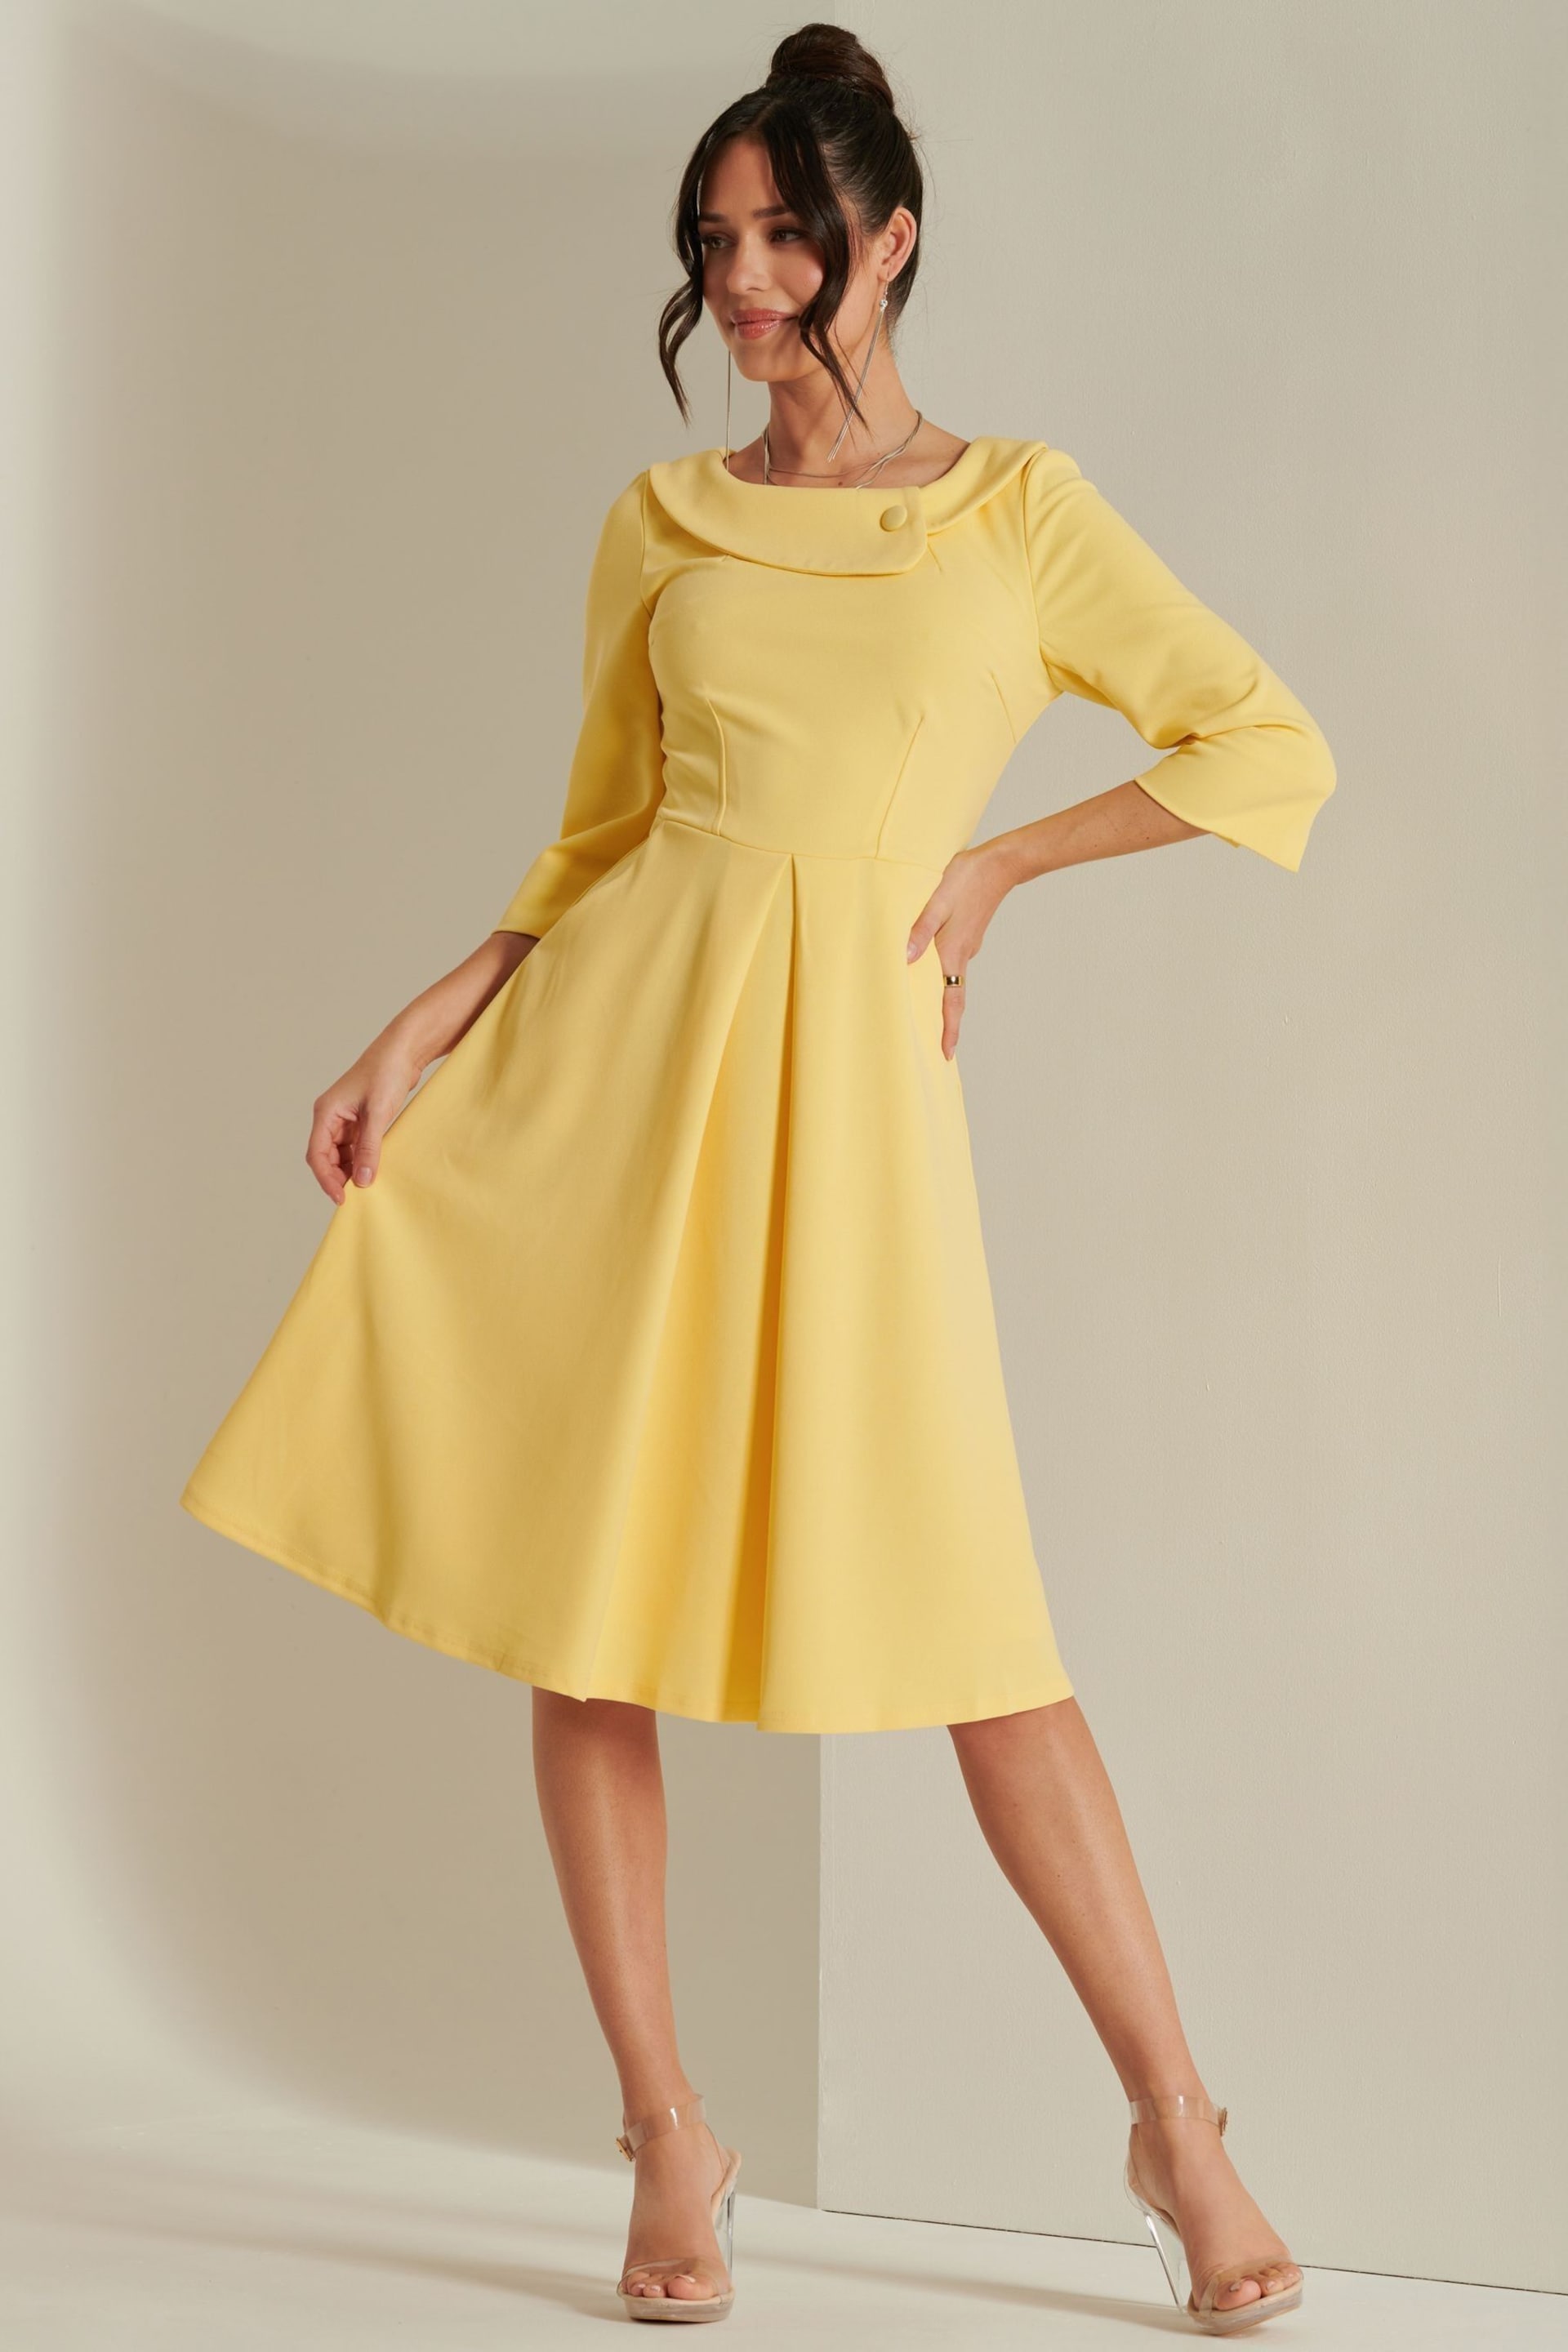 Jolie Moi Yellow 3/4 Sleeve Fold Neck Midi Dress - Image 3 of 6